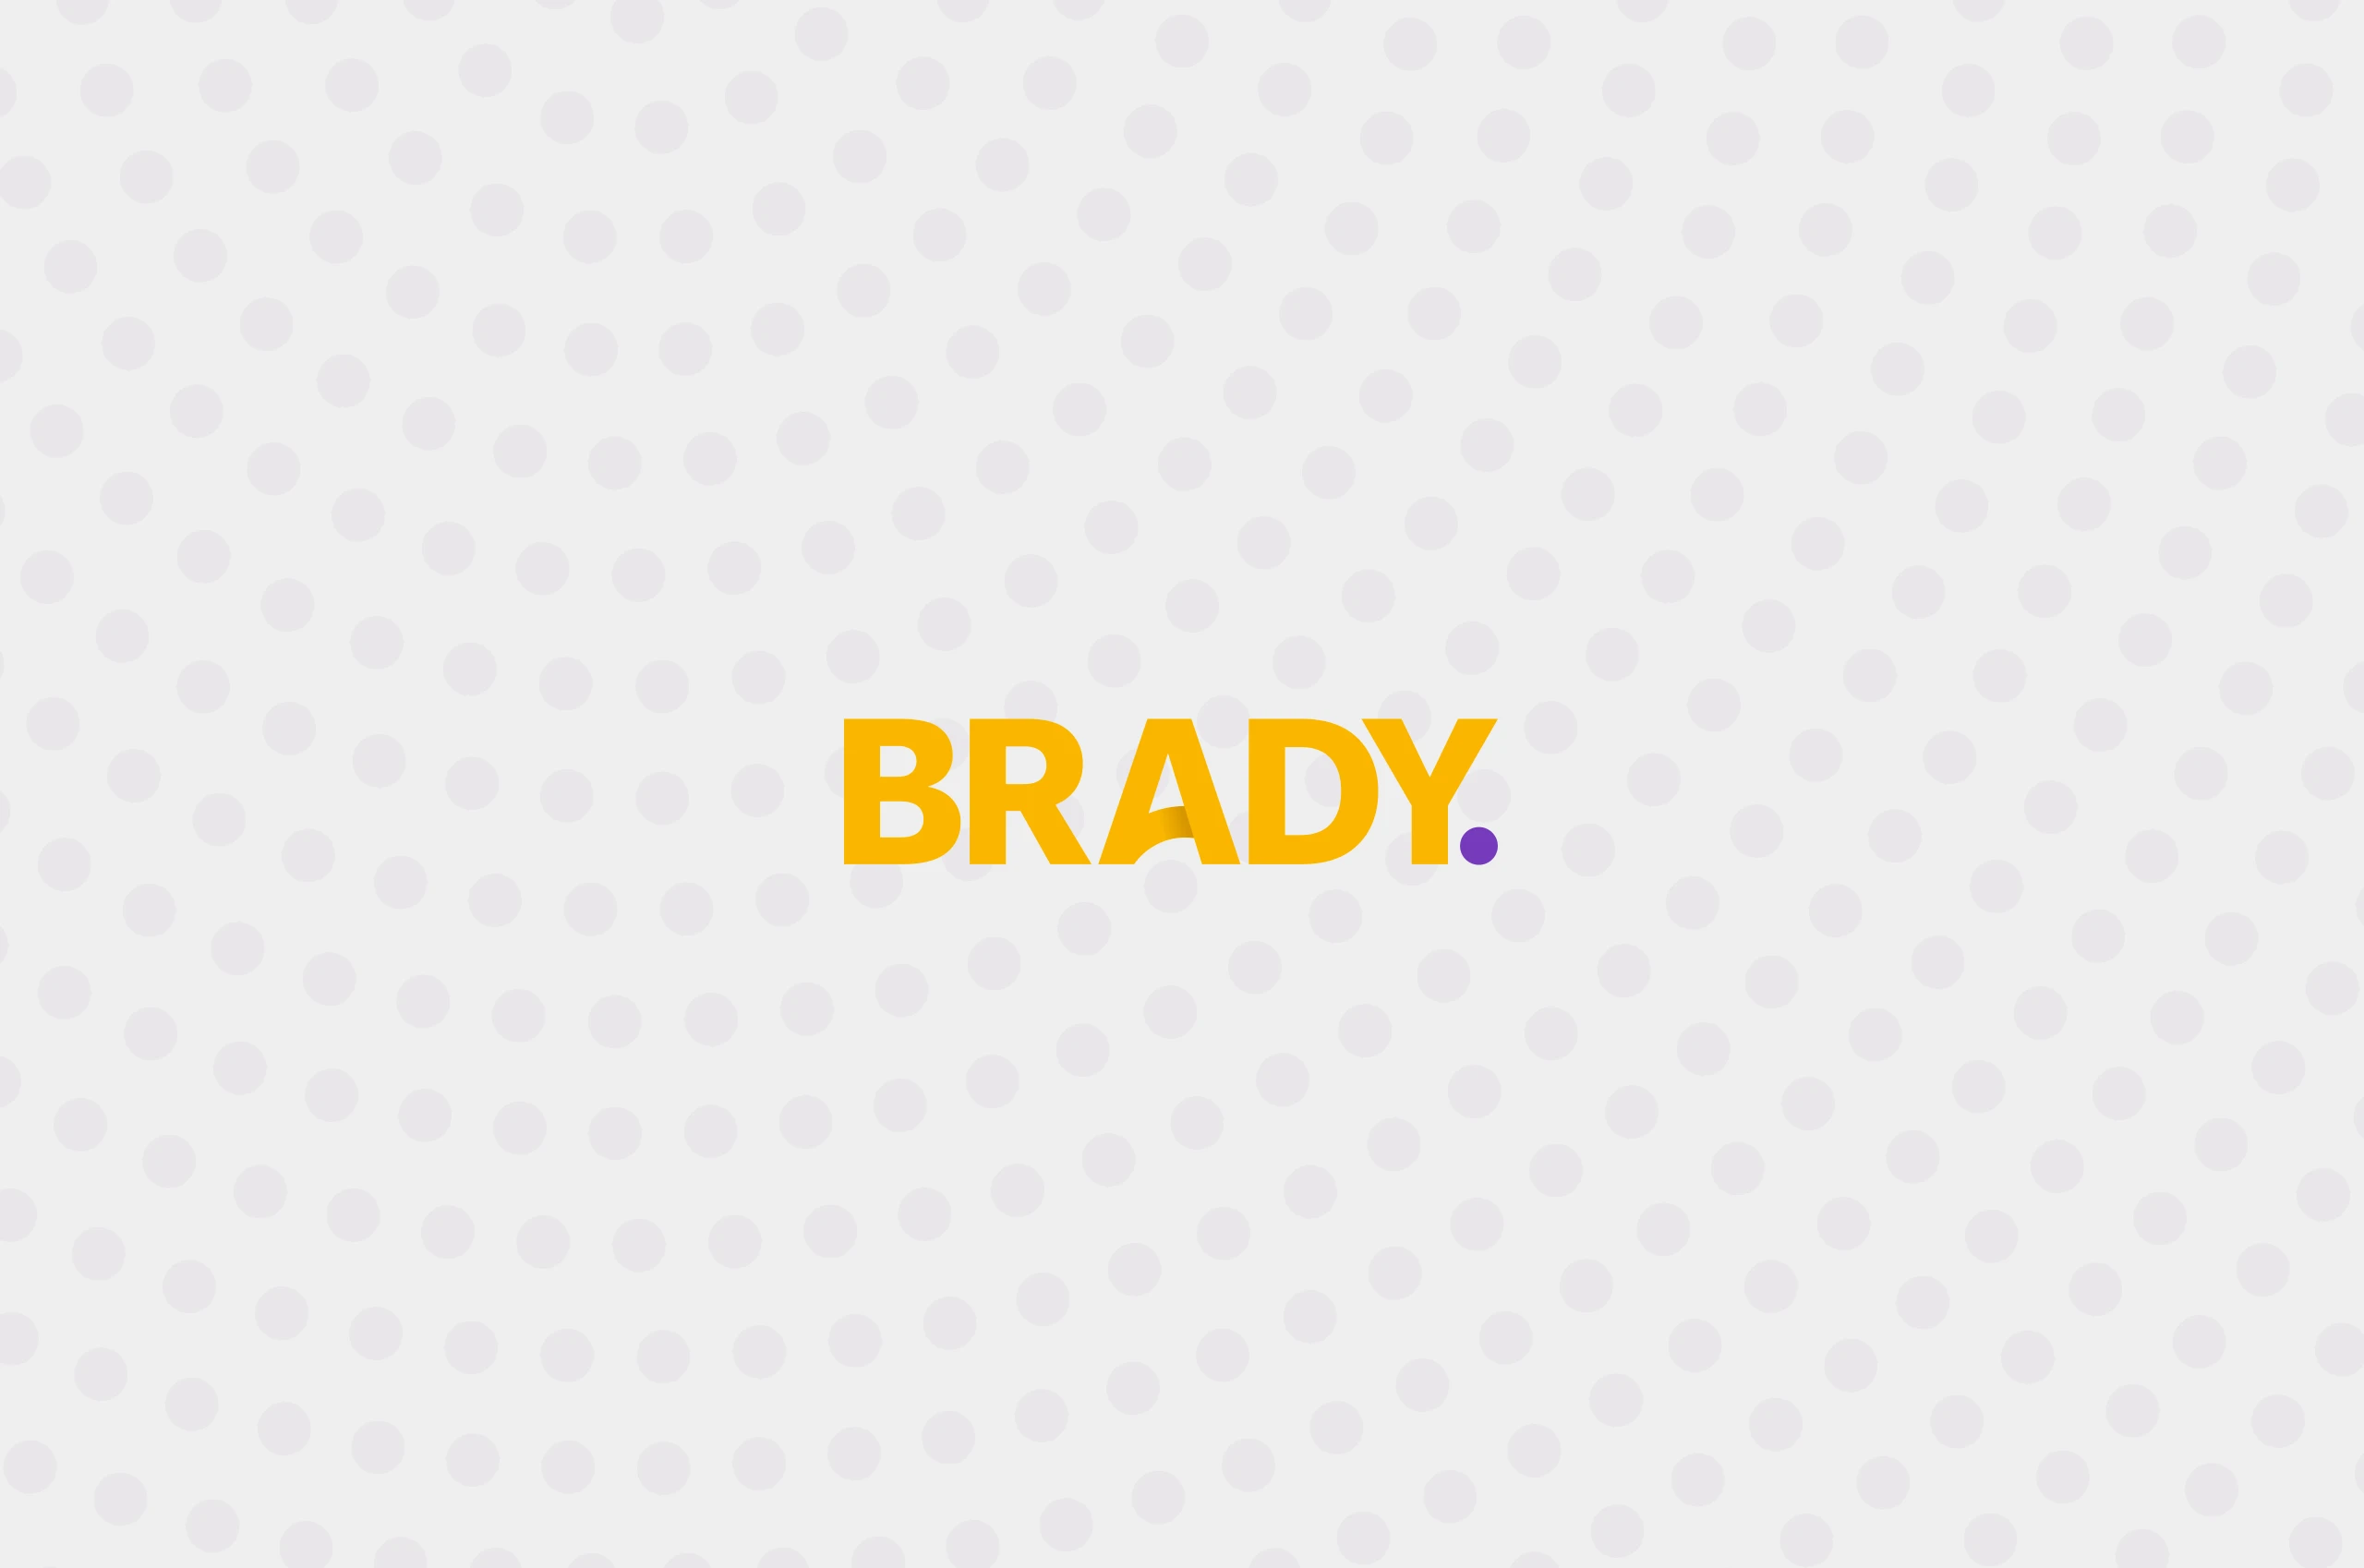 Brady Plc design